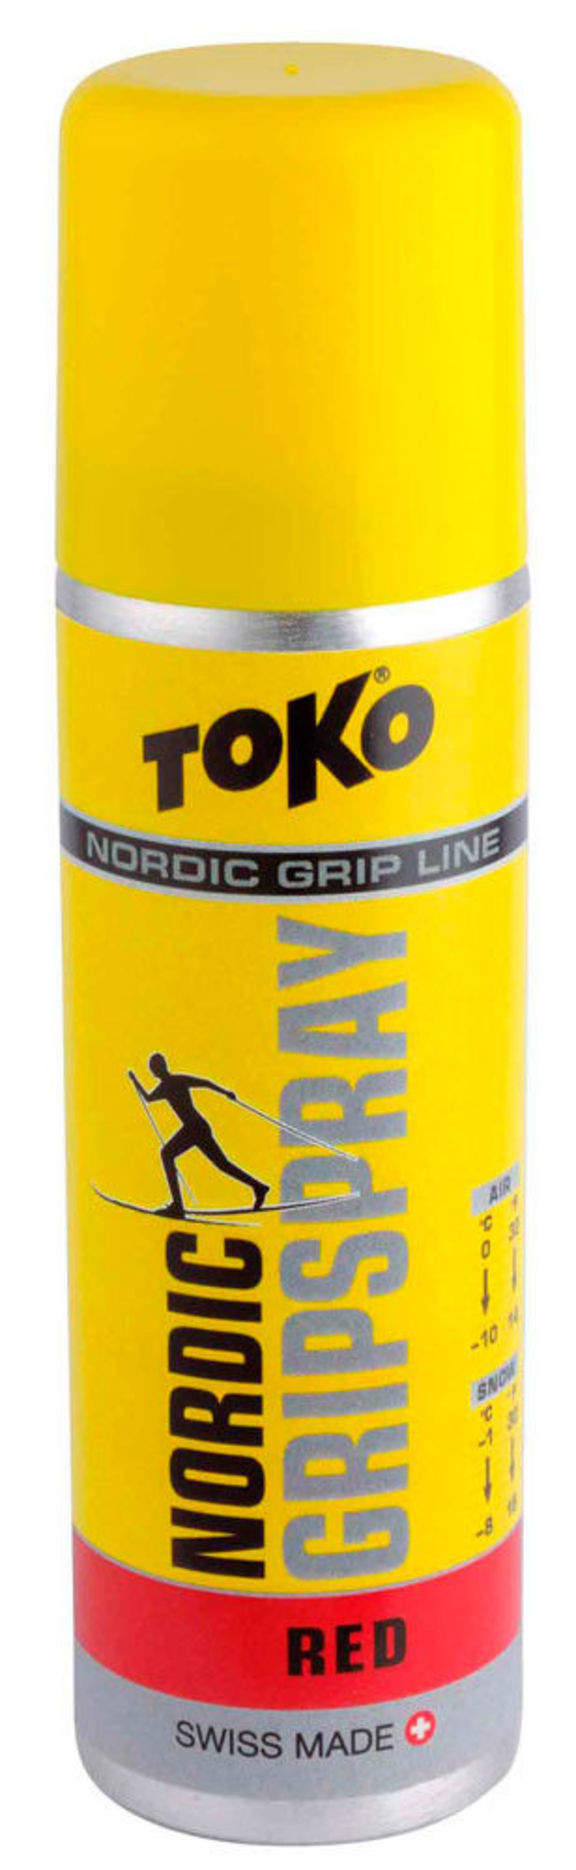 Віск Toko Nordlic Grip Spray 70ml